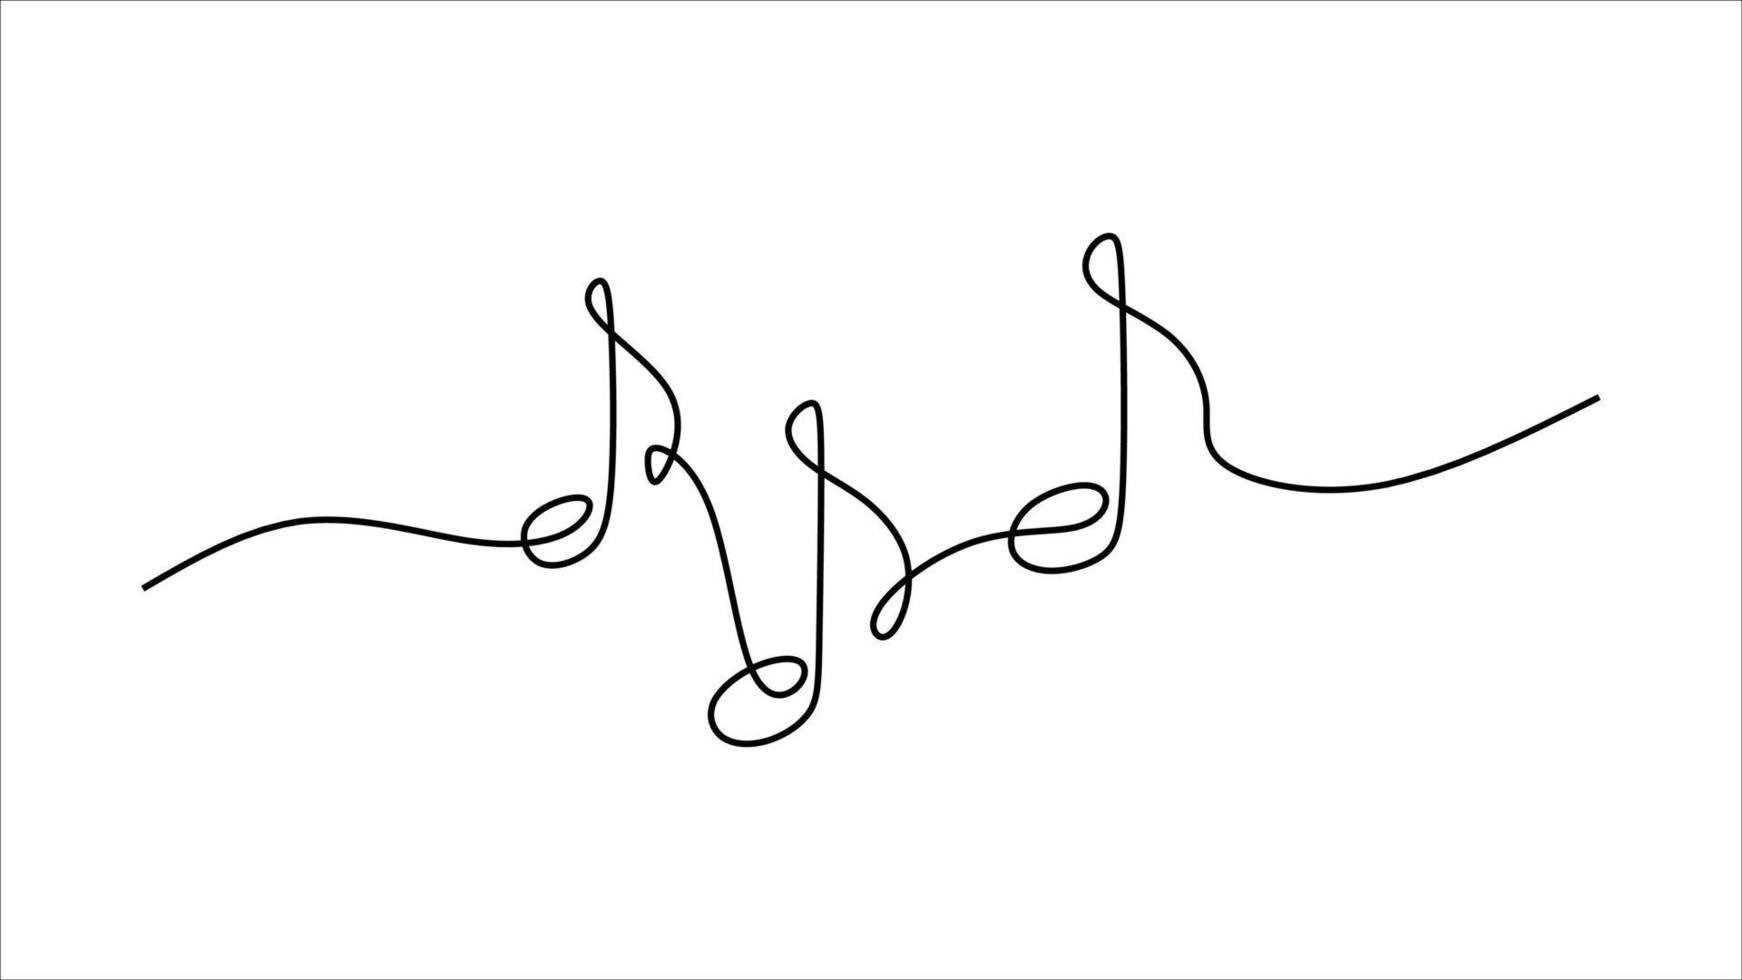 musik notera en linje kontinuerlig enda redigerbar linje konst vektor